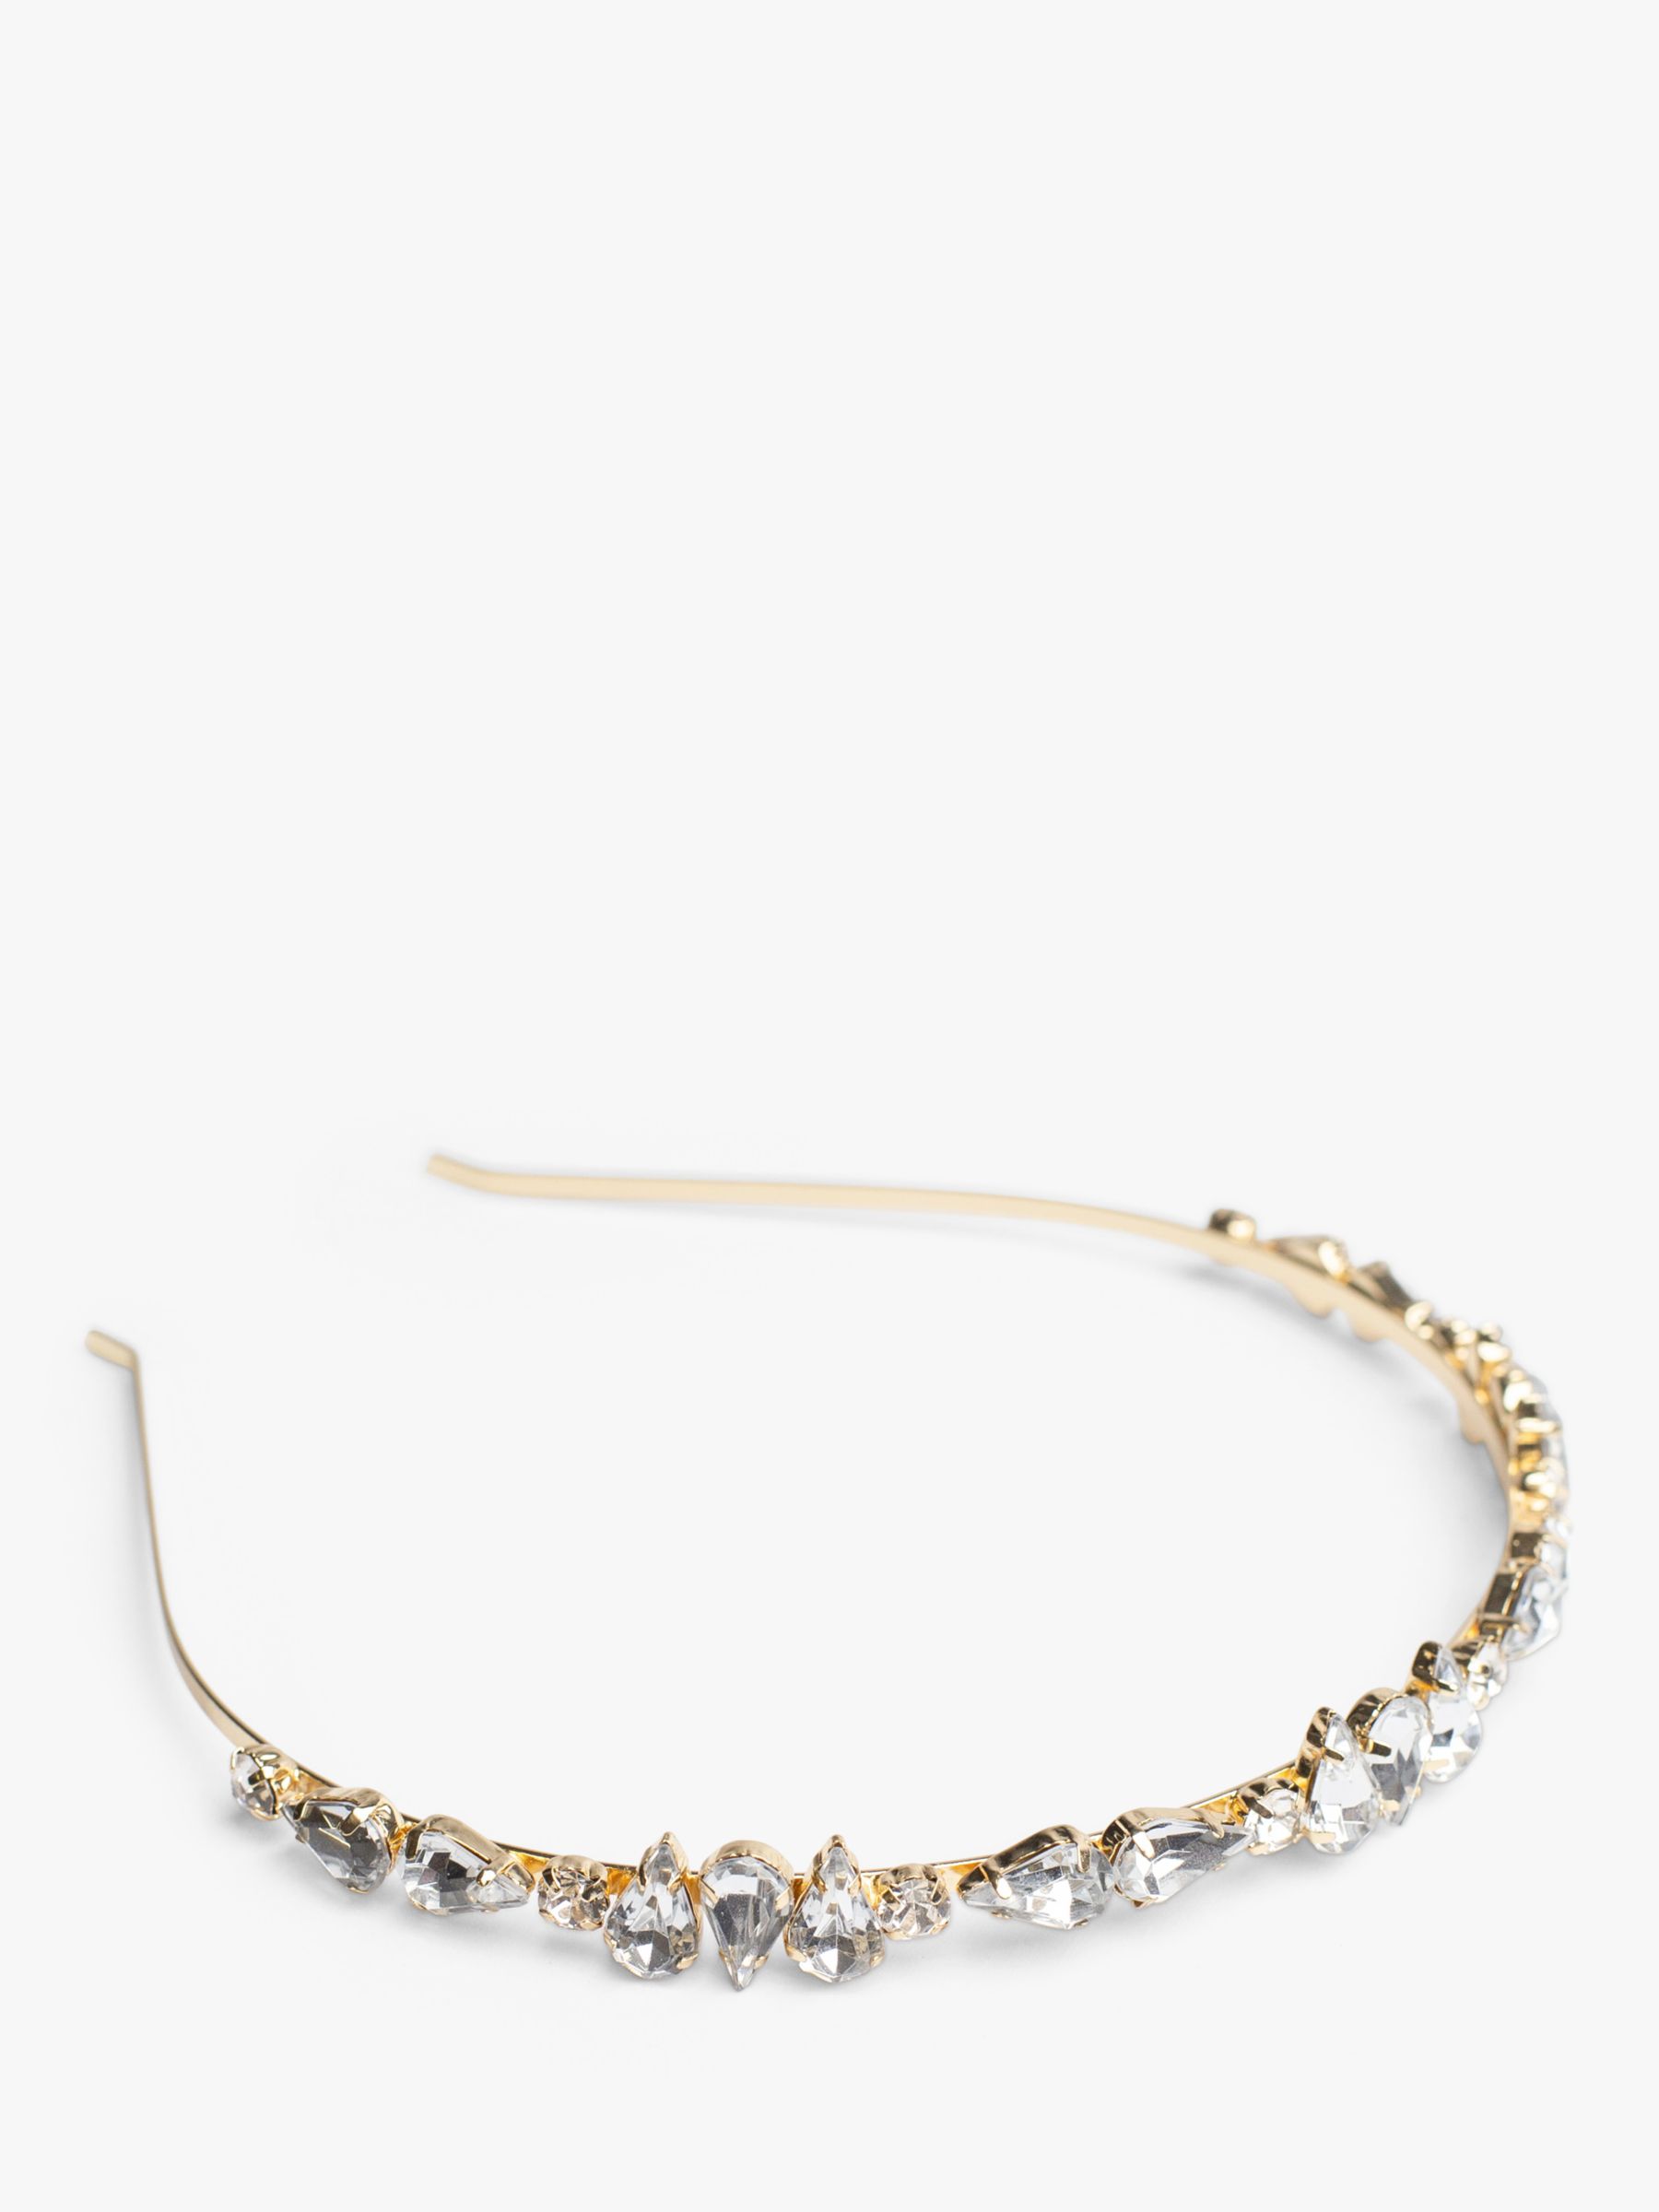 Bloom & Bay Snowdrop Crystal Headband, Gold, One Size